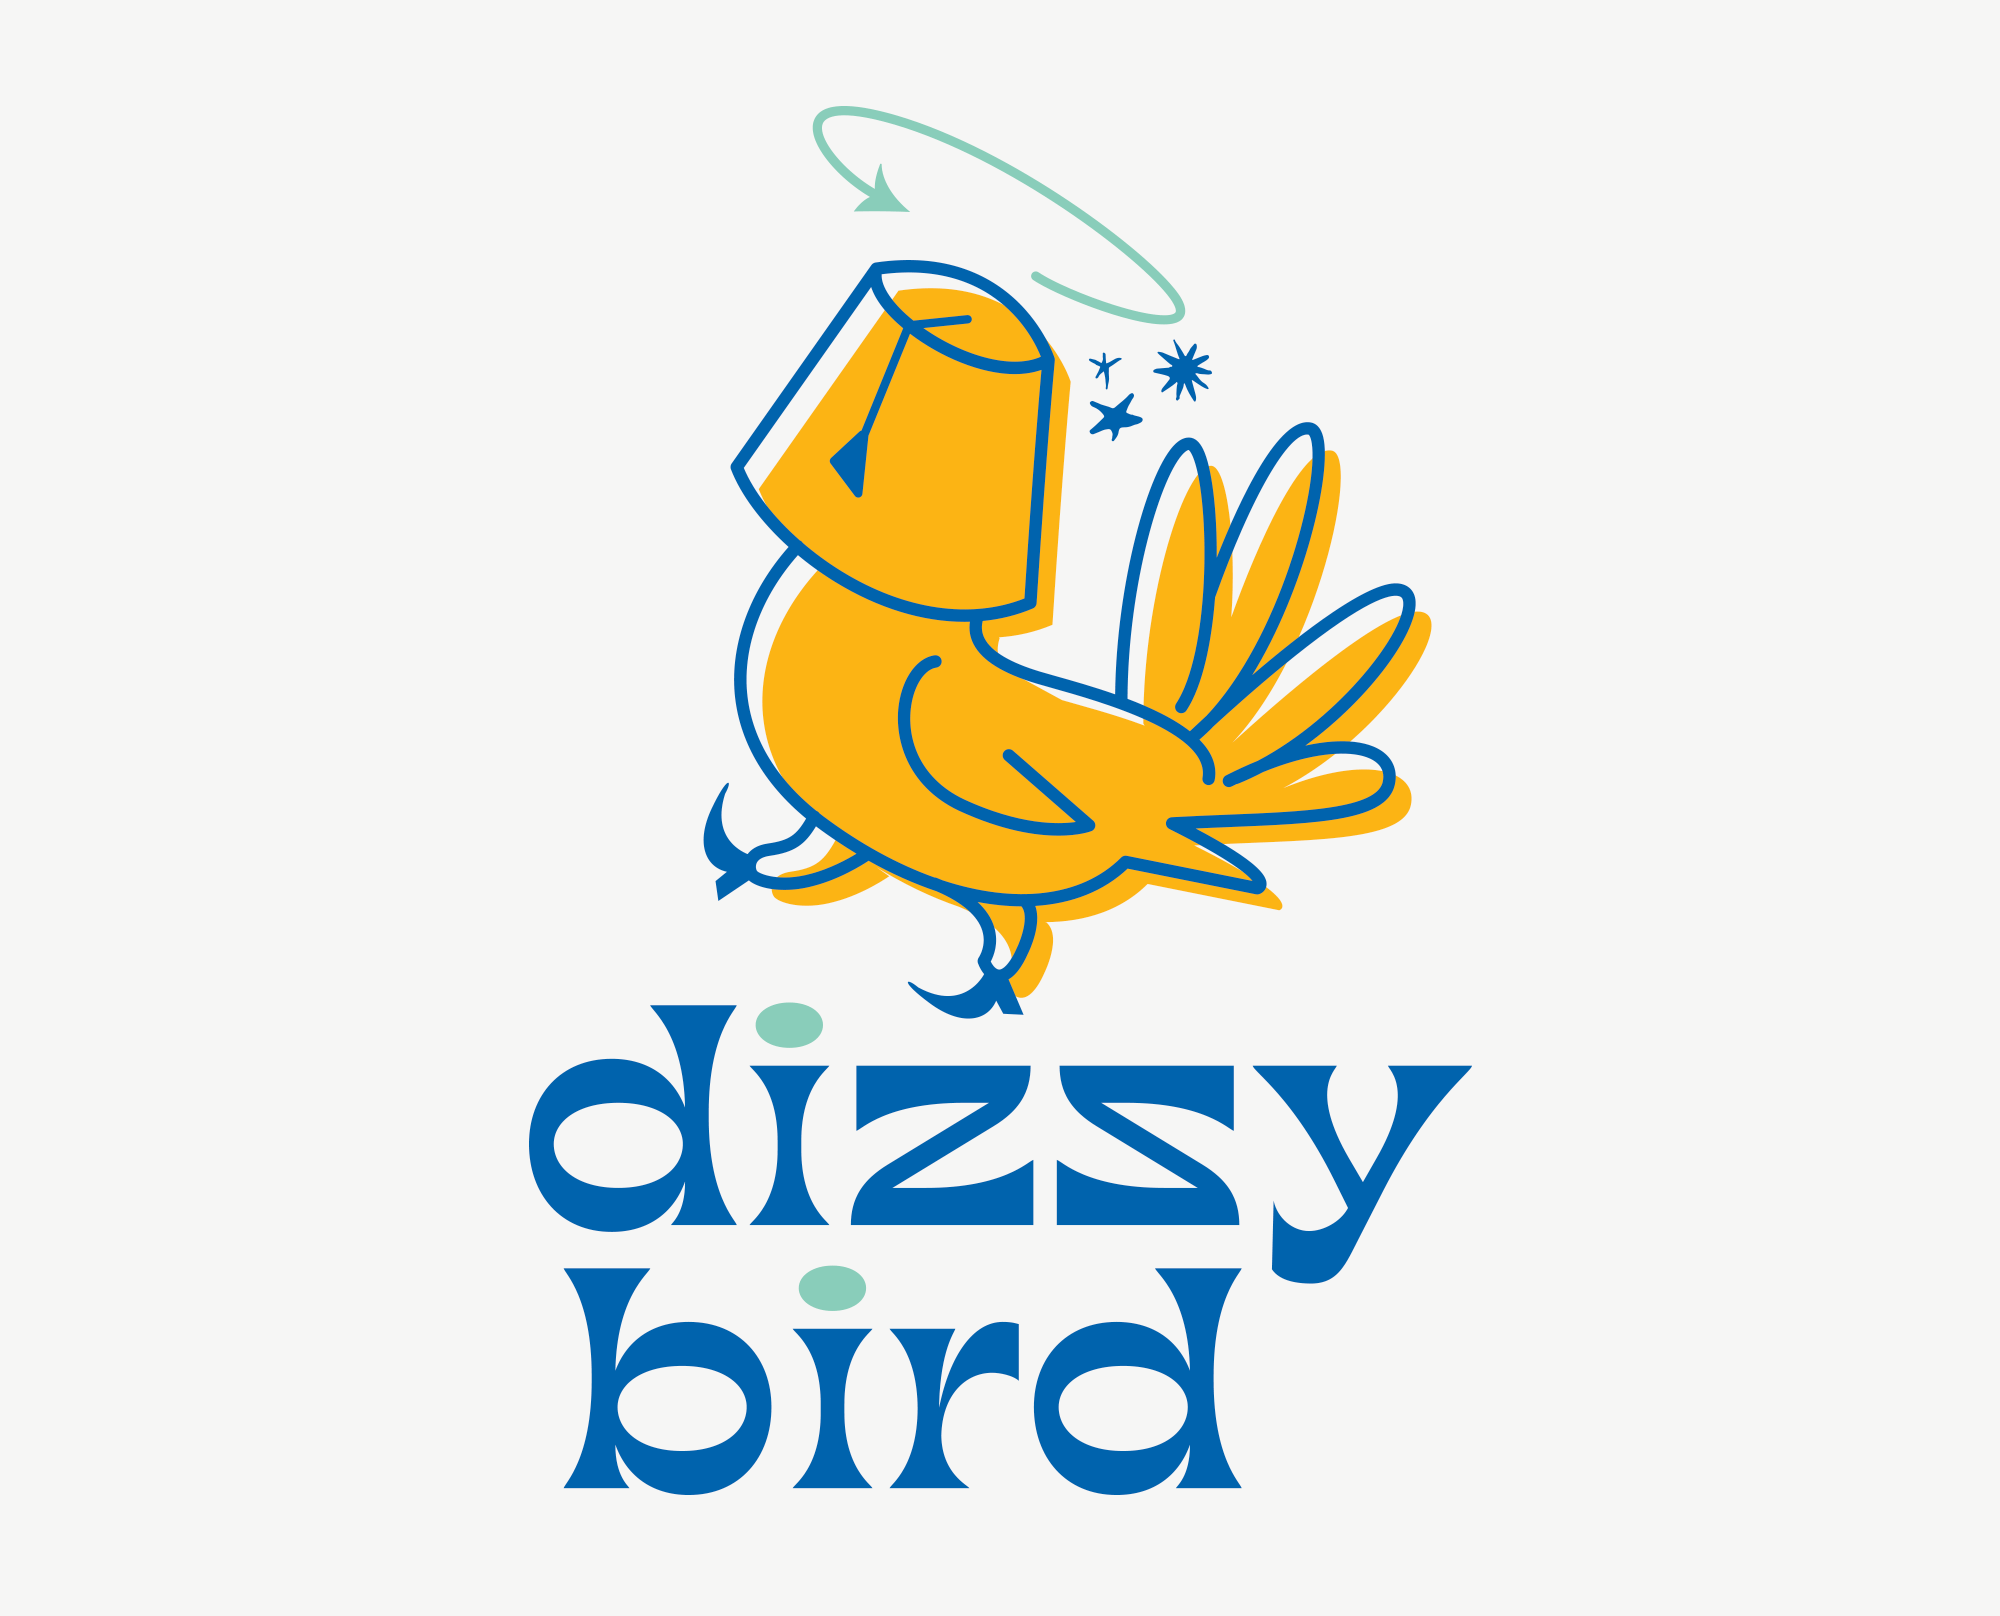 Dizzy bird QSR restaurant branding design thumb